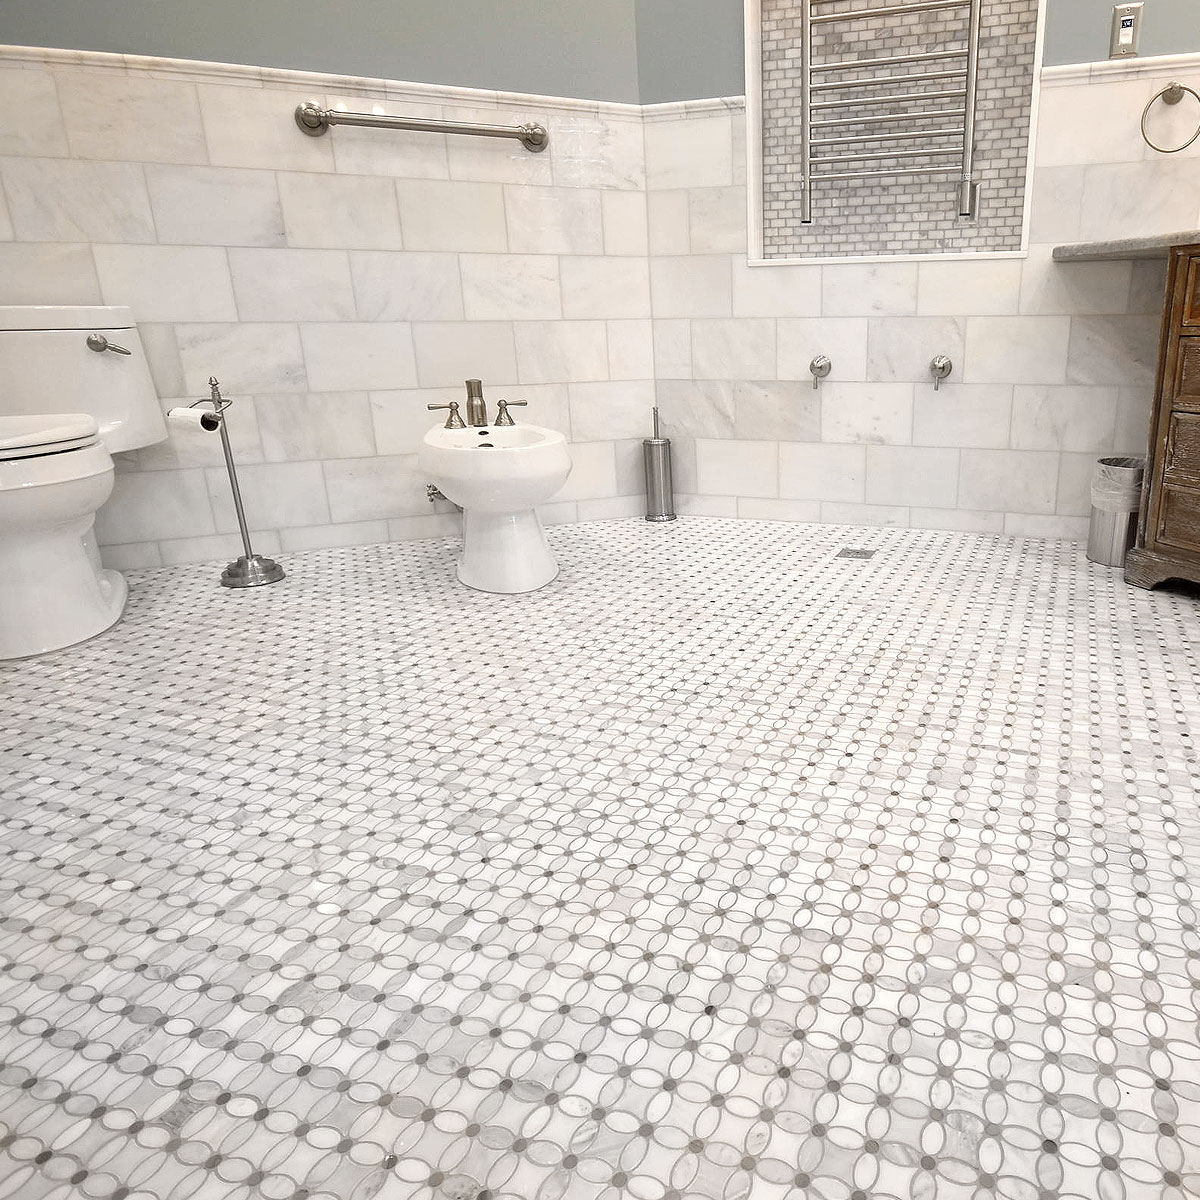 Flower marble mosaic tile white gray blue colors bathroom floor carrara wall BA45056